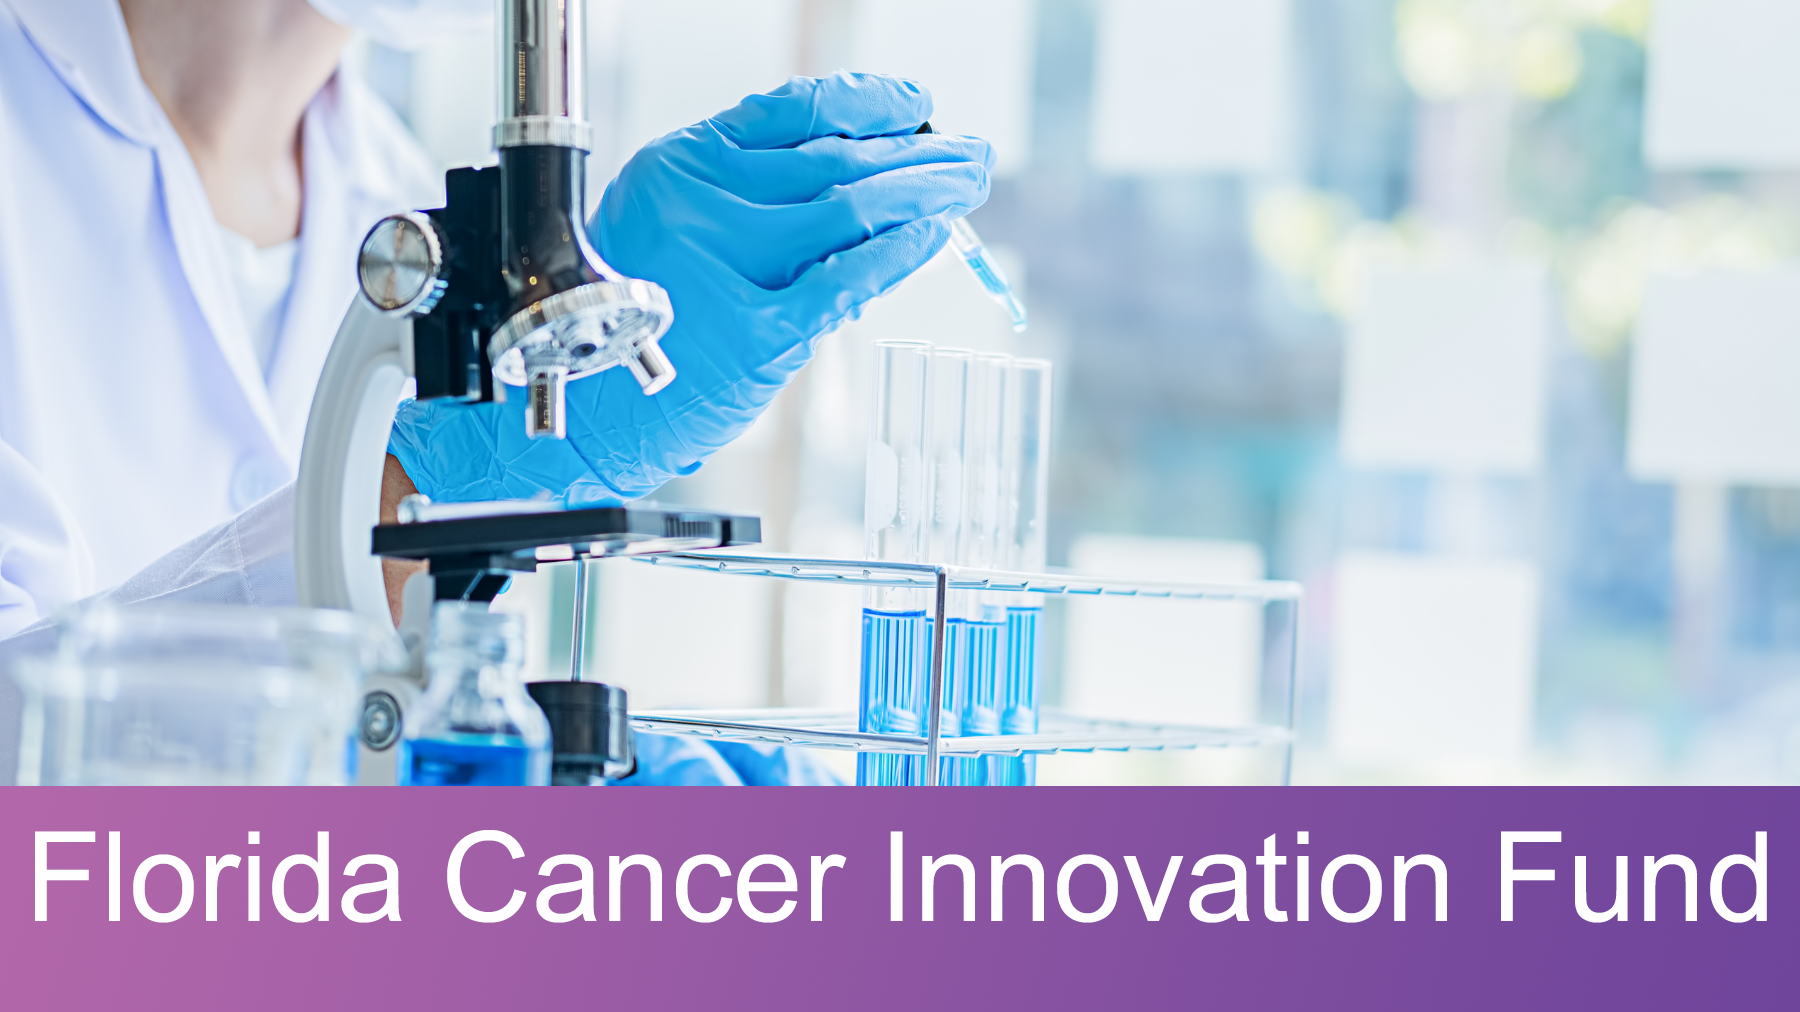 Florida Cancer Innovation Fund Image